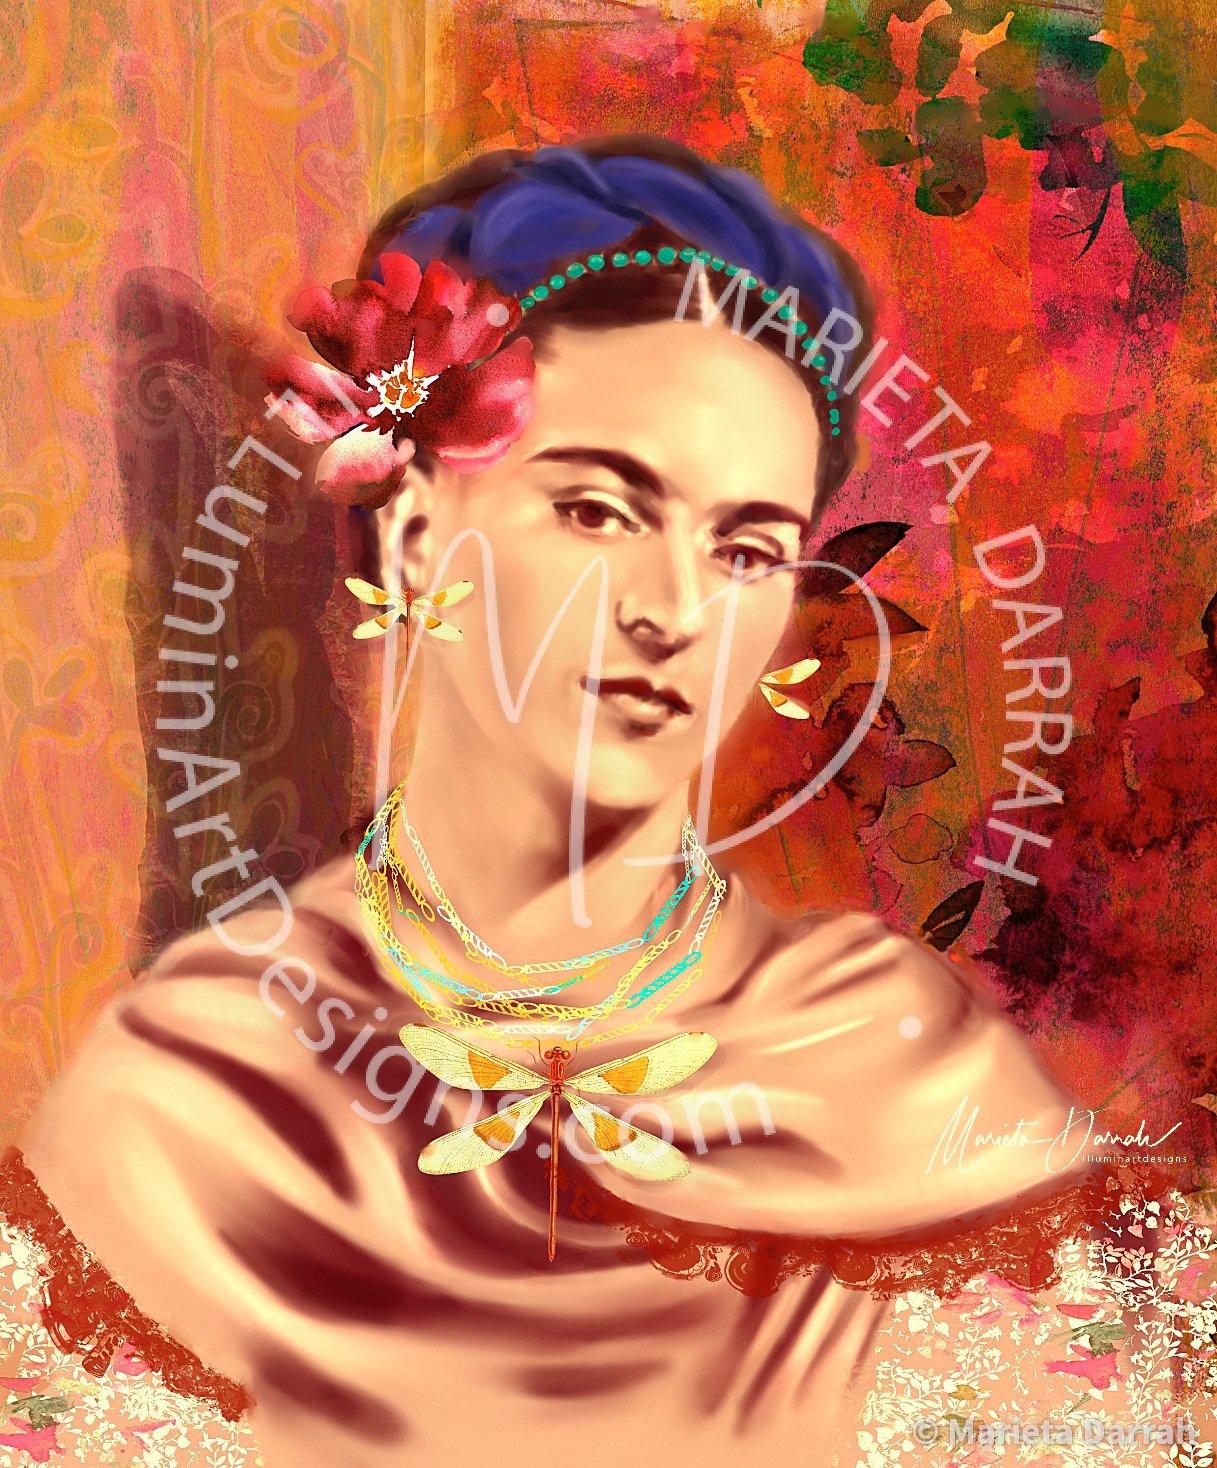 Frida kahlo portraits subtitlesphere